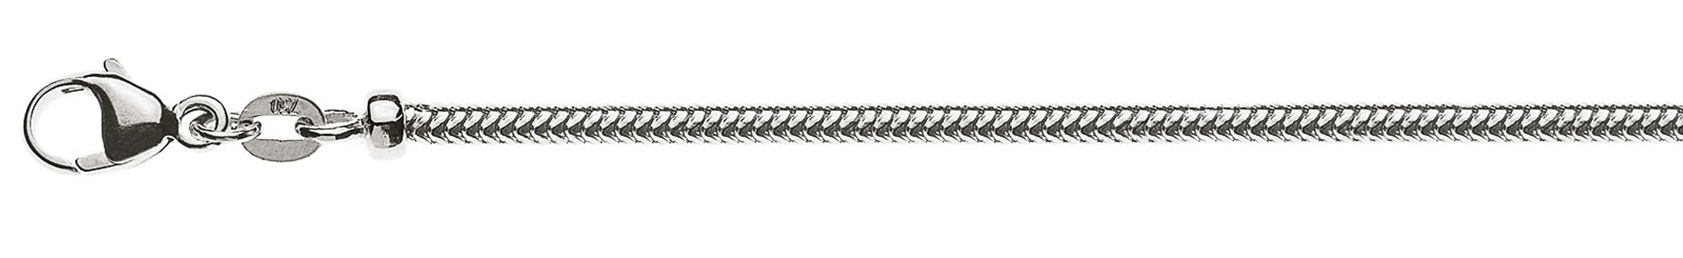 AURONOS Prestige White Gold 18K Snake Chain Necklace 50cm 2.4mm